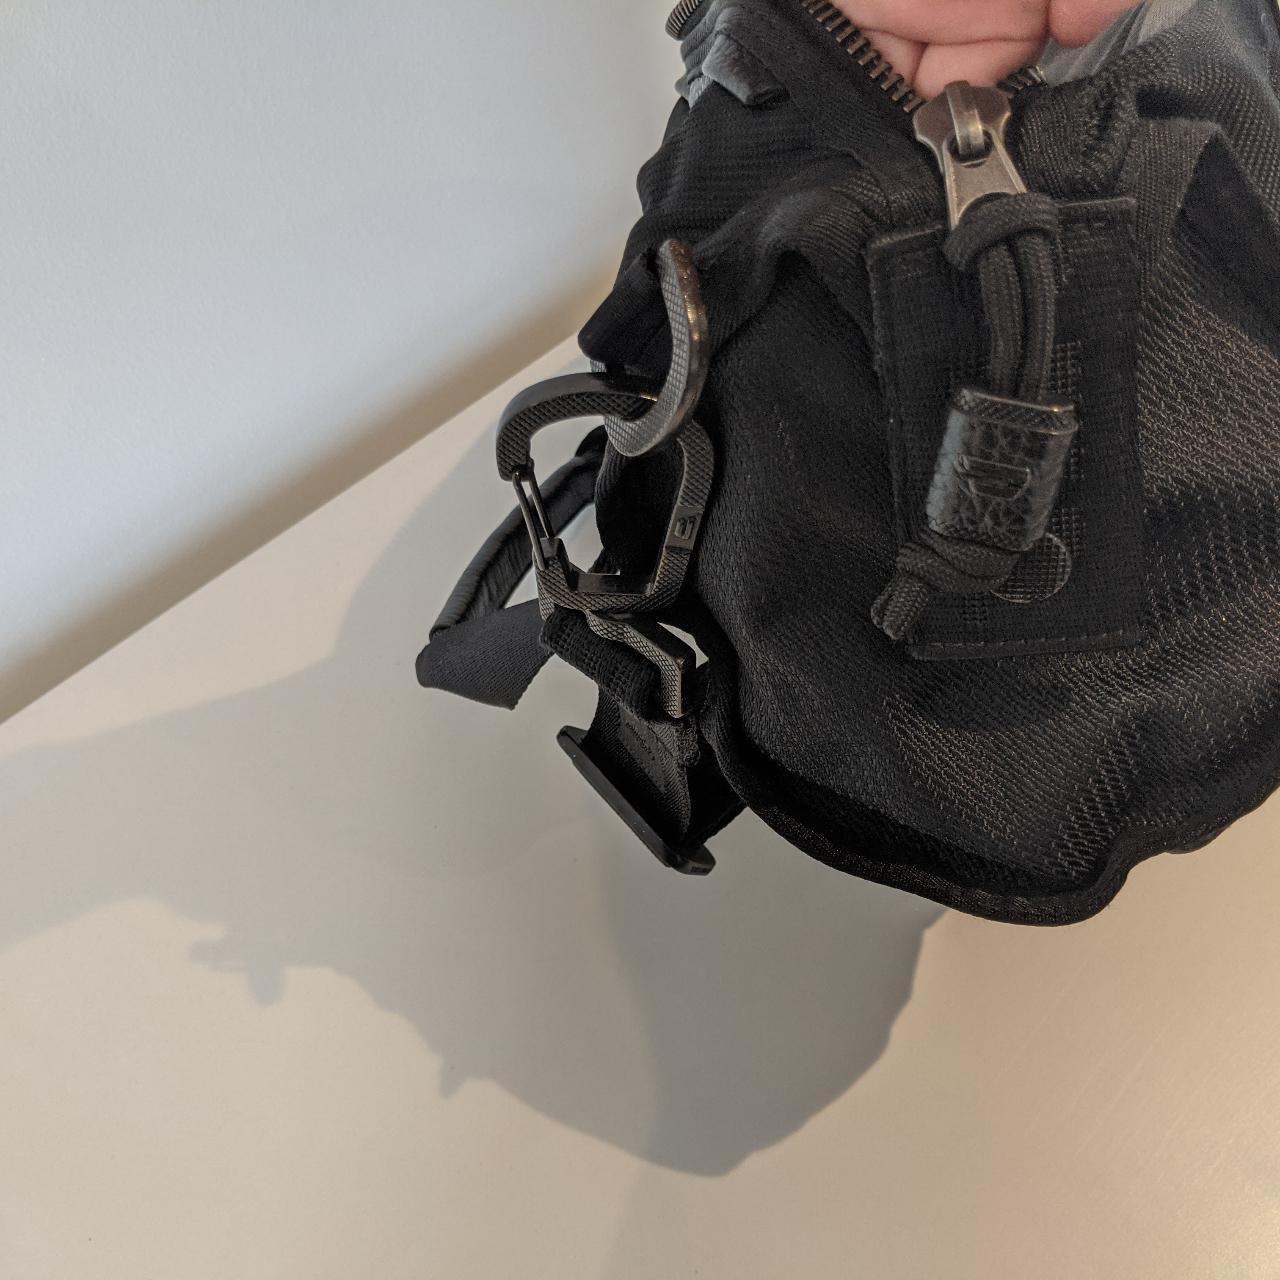 Product Image 4 - Black Diesel handbag with adjustable